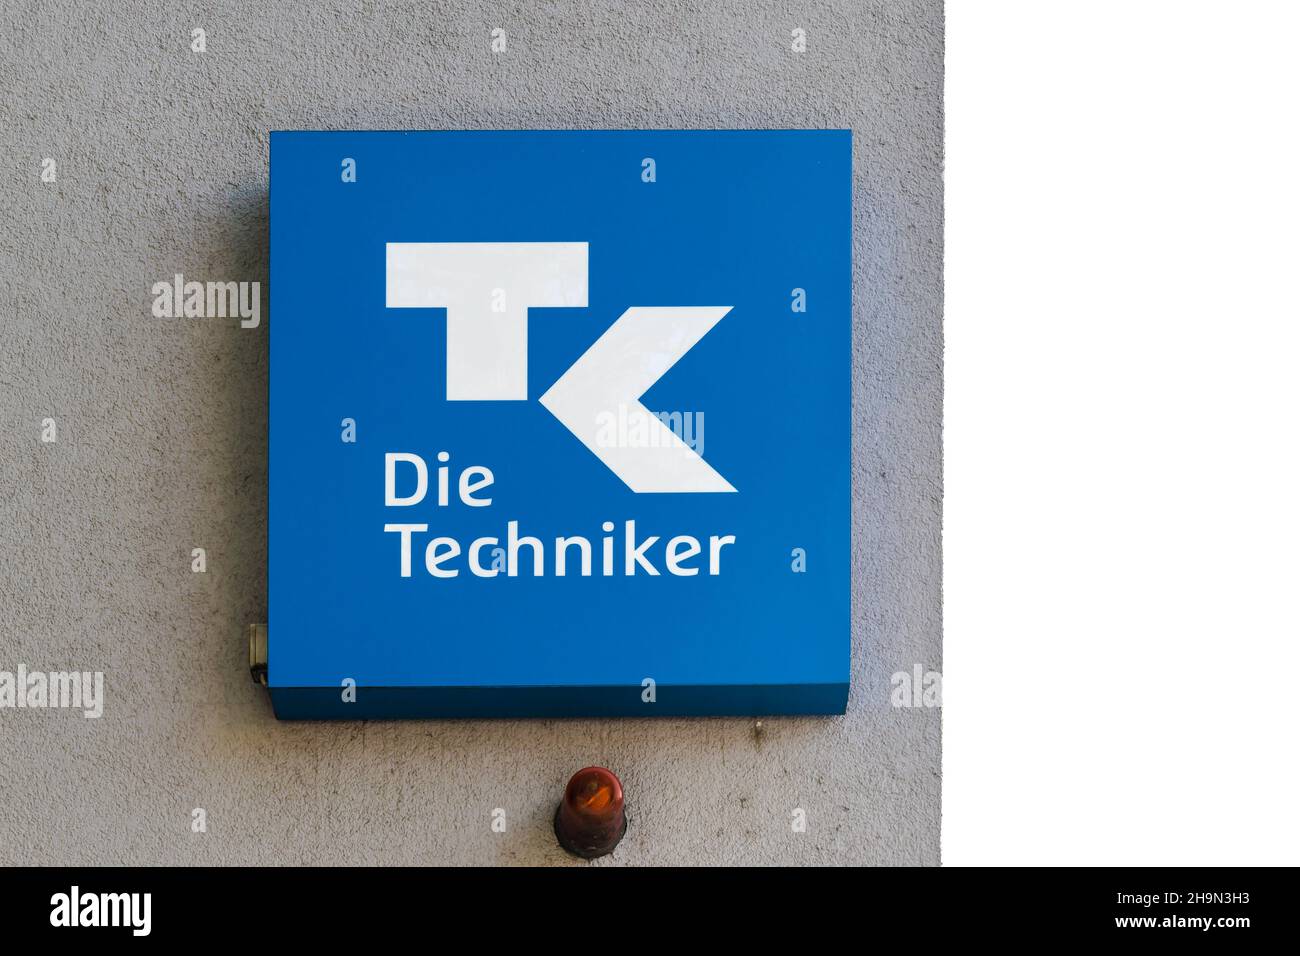 GIESSEN, ALLEMAGNE - 2021 04 09: Signe de l'assurance maladie Techniker Krankenkasse - TK - Die Techniker à Giessen, Allemagne Banque D'Images